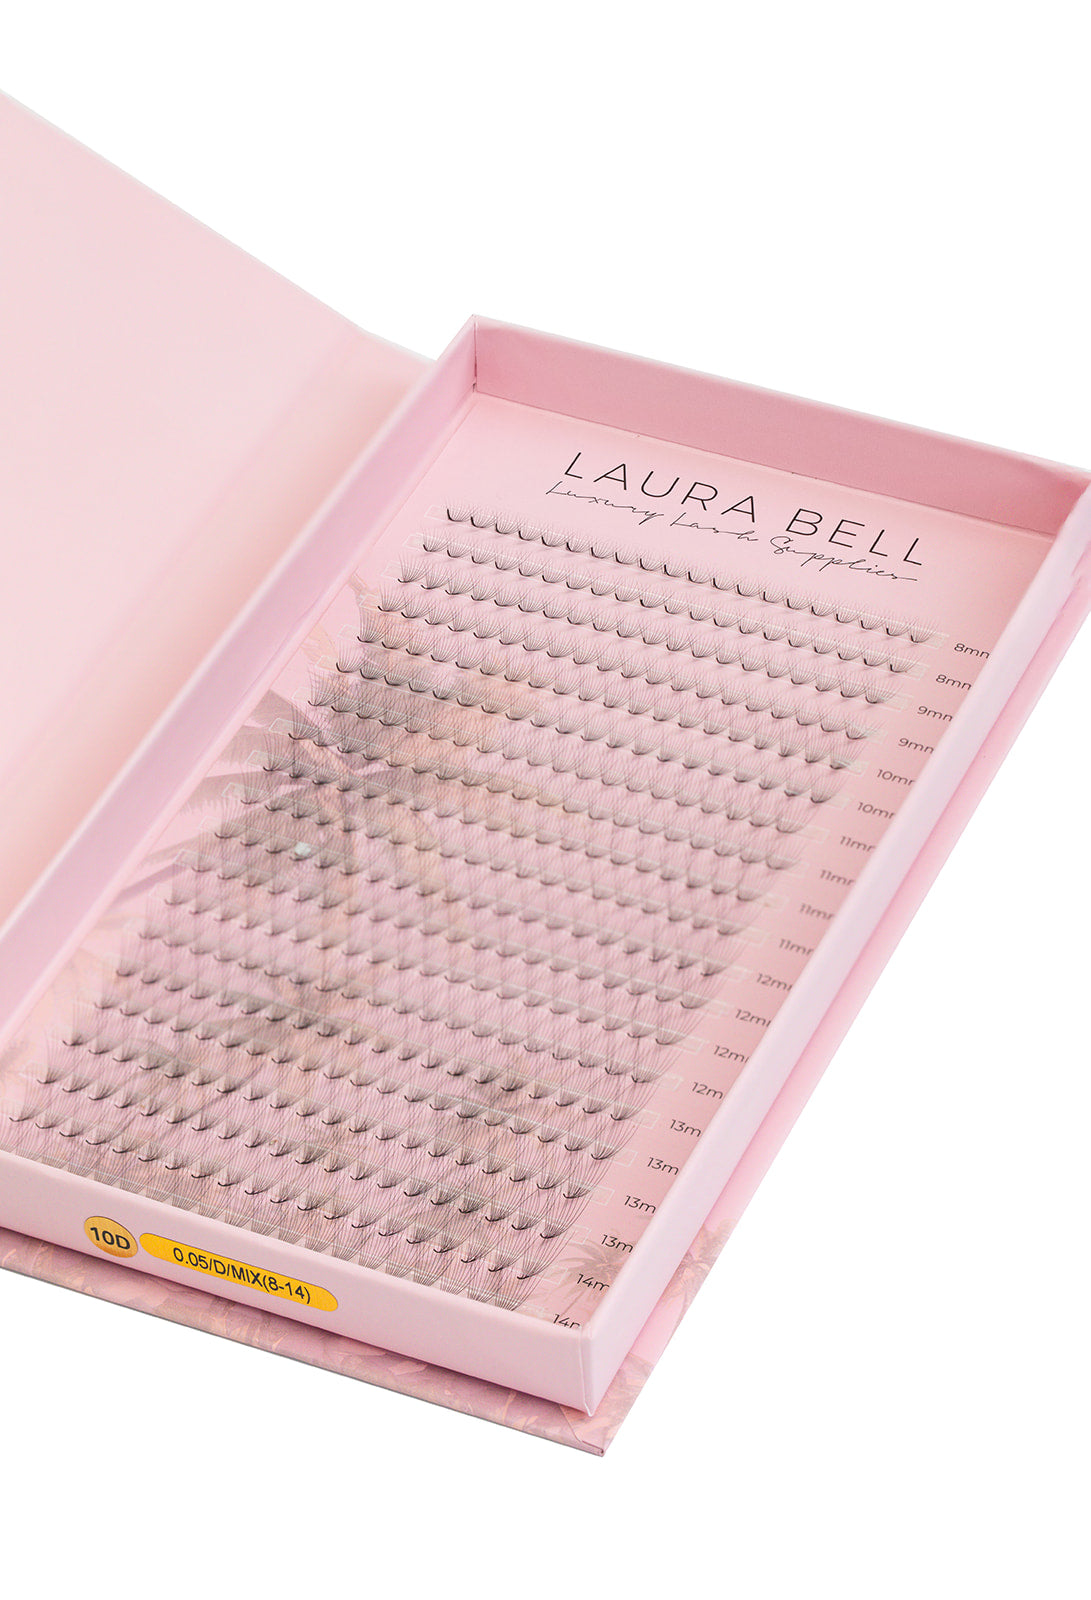 10D Premade Volume Fans (400 Fans) - Laura Bell Luxury Lash Supplies